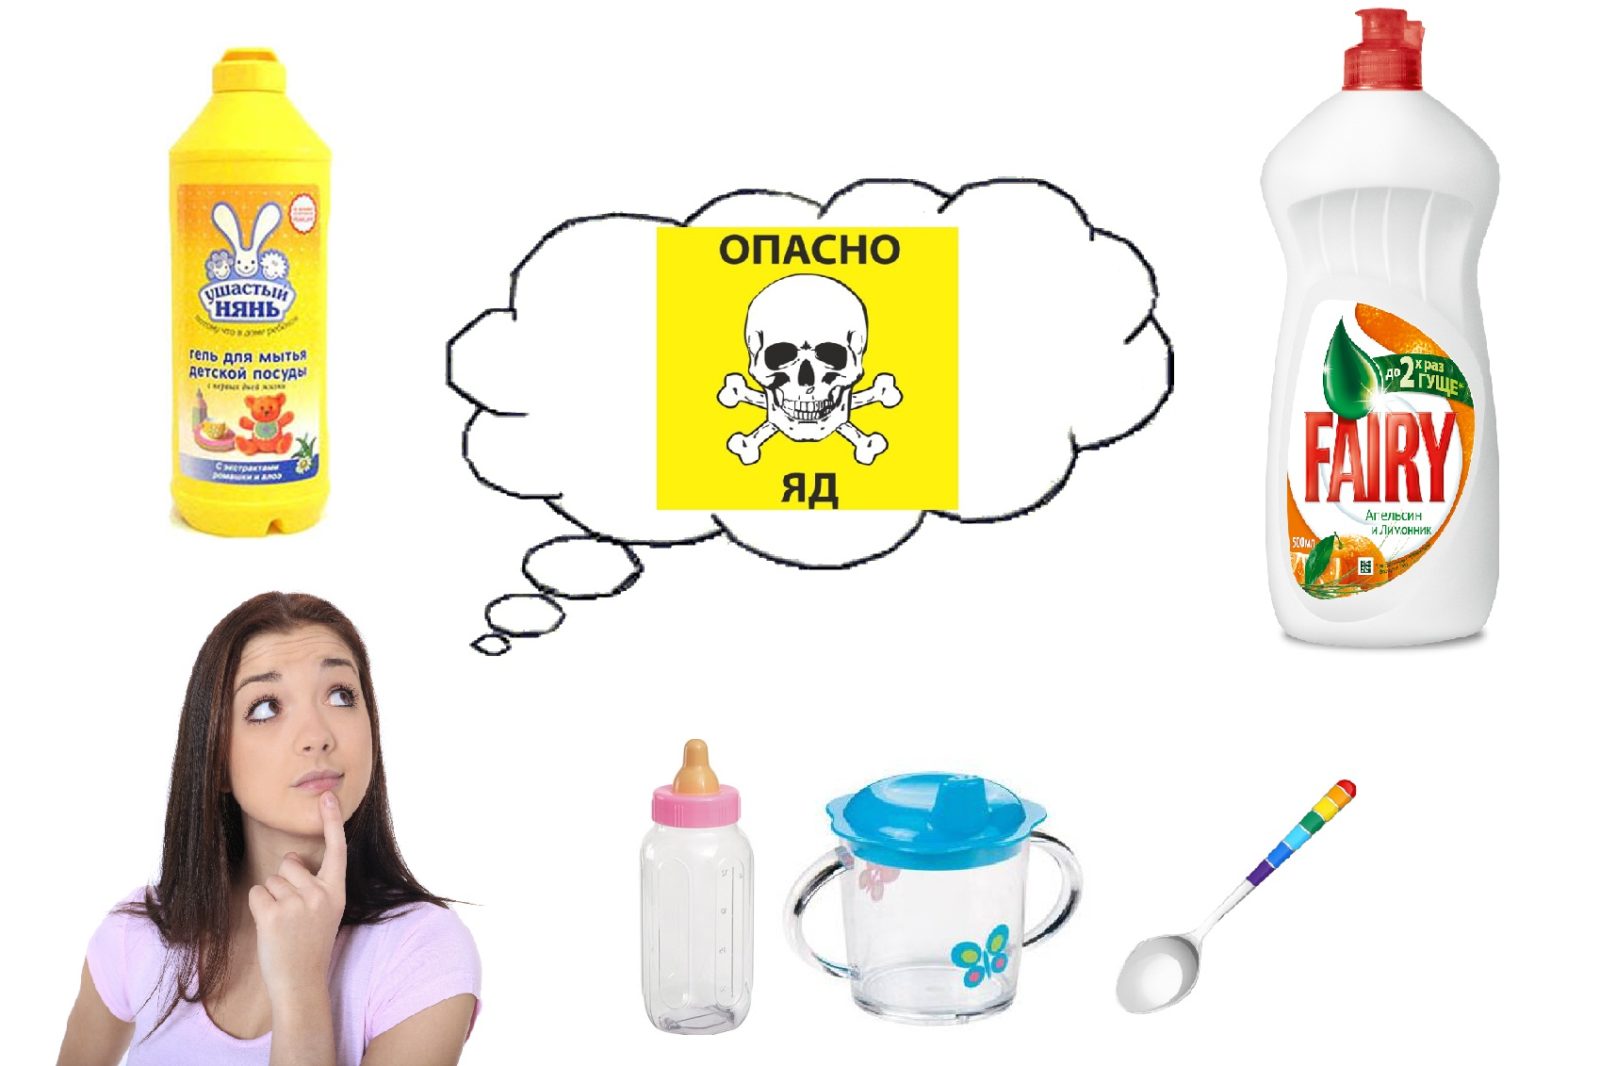 Detergents for children's dishes